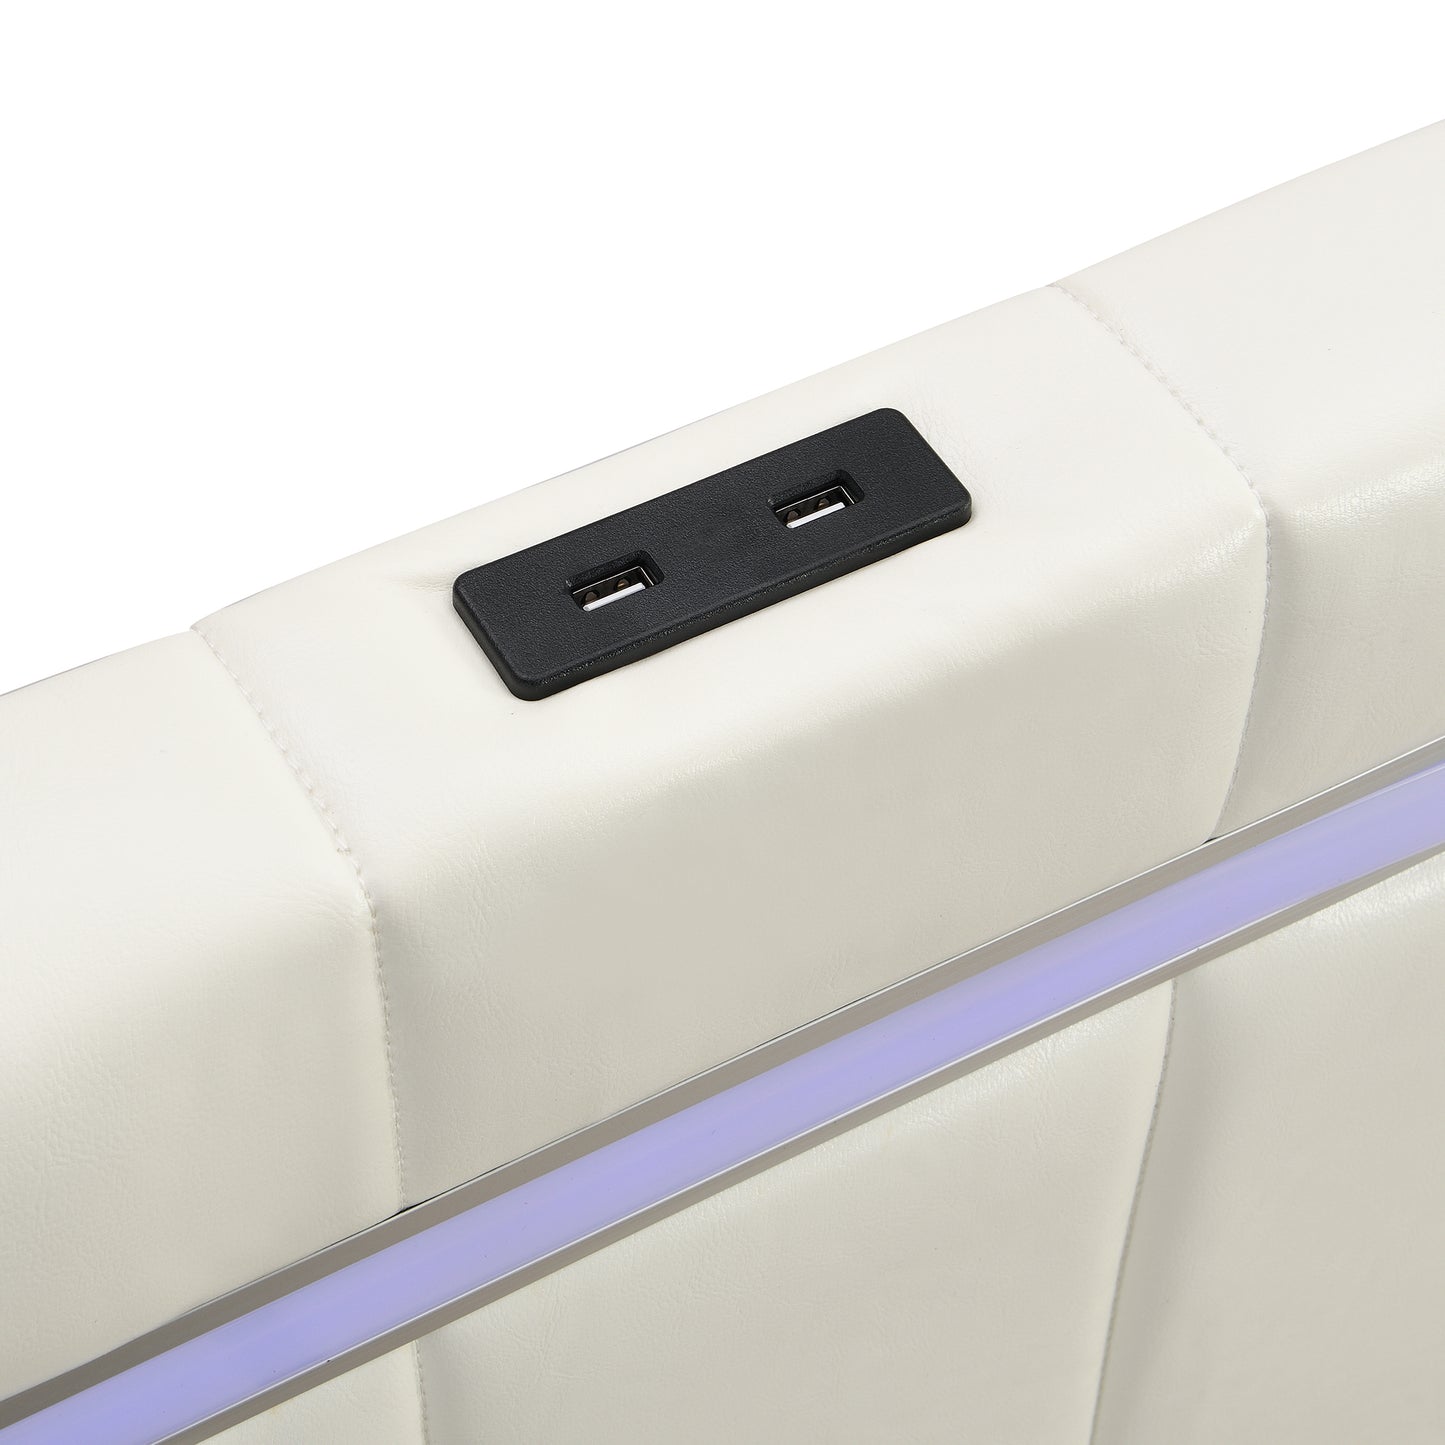 Queen Size Floating Bed Frame with LED Lights and USB Charging,Modern Upholstered Platform LED Bed Frame, White